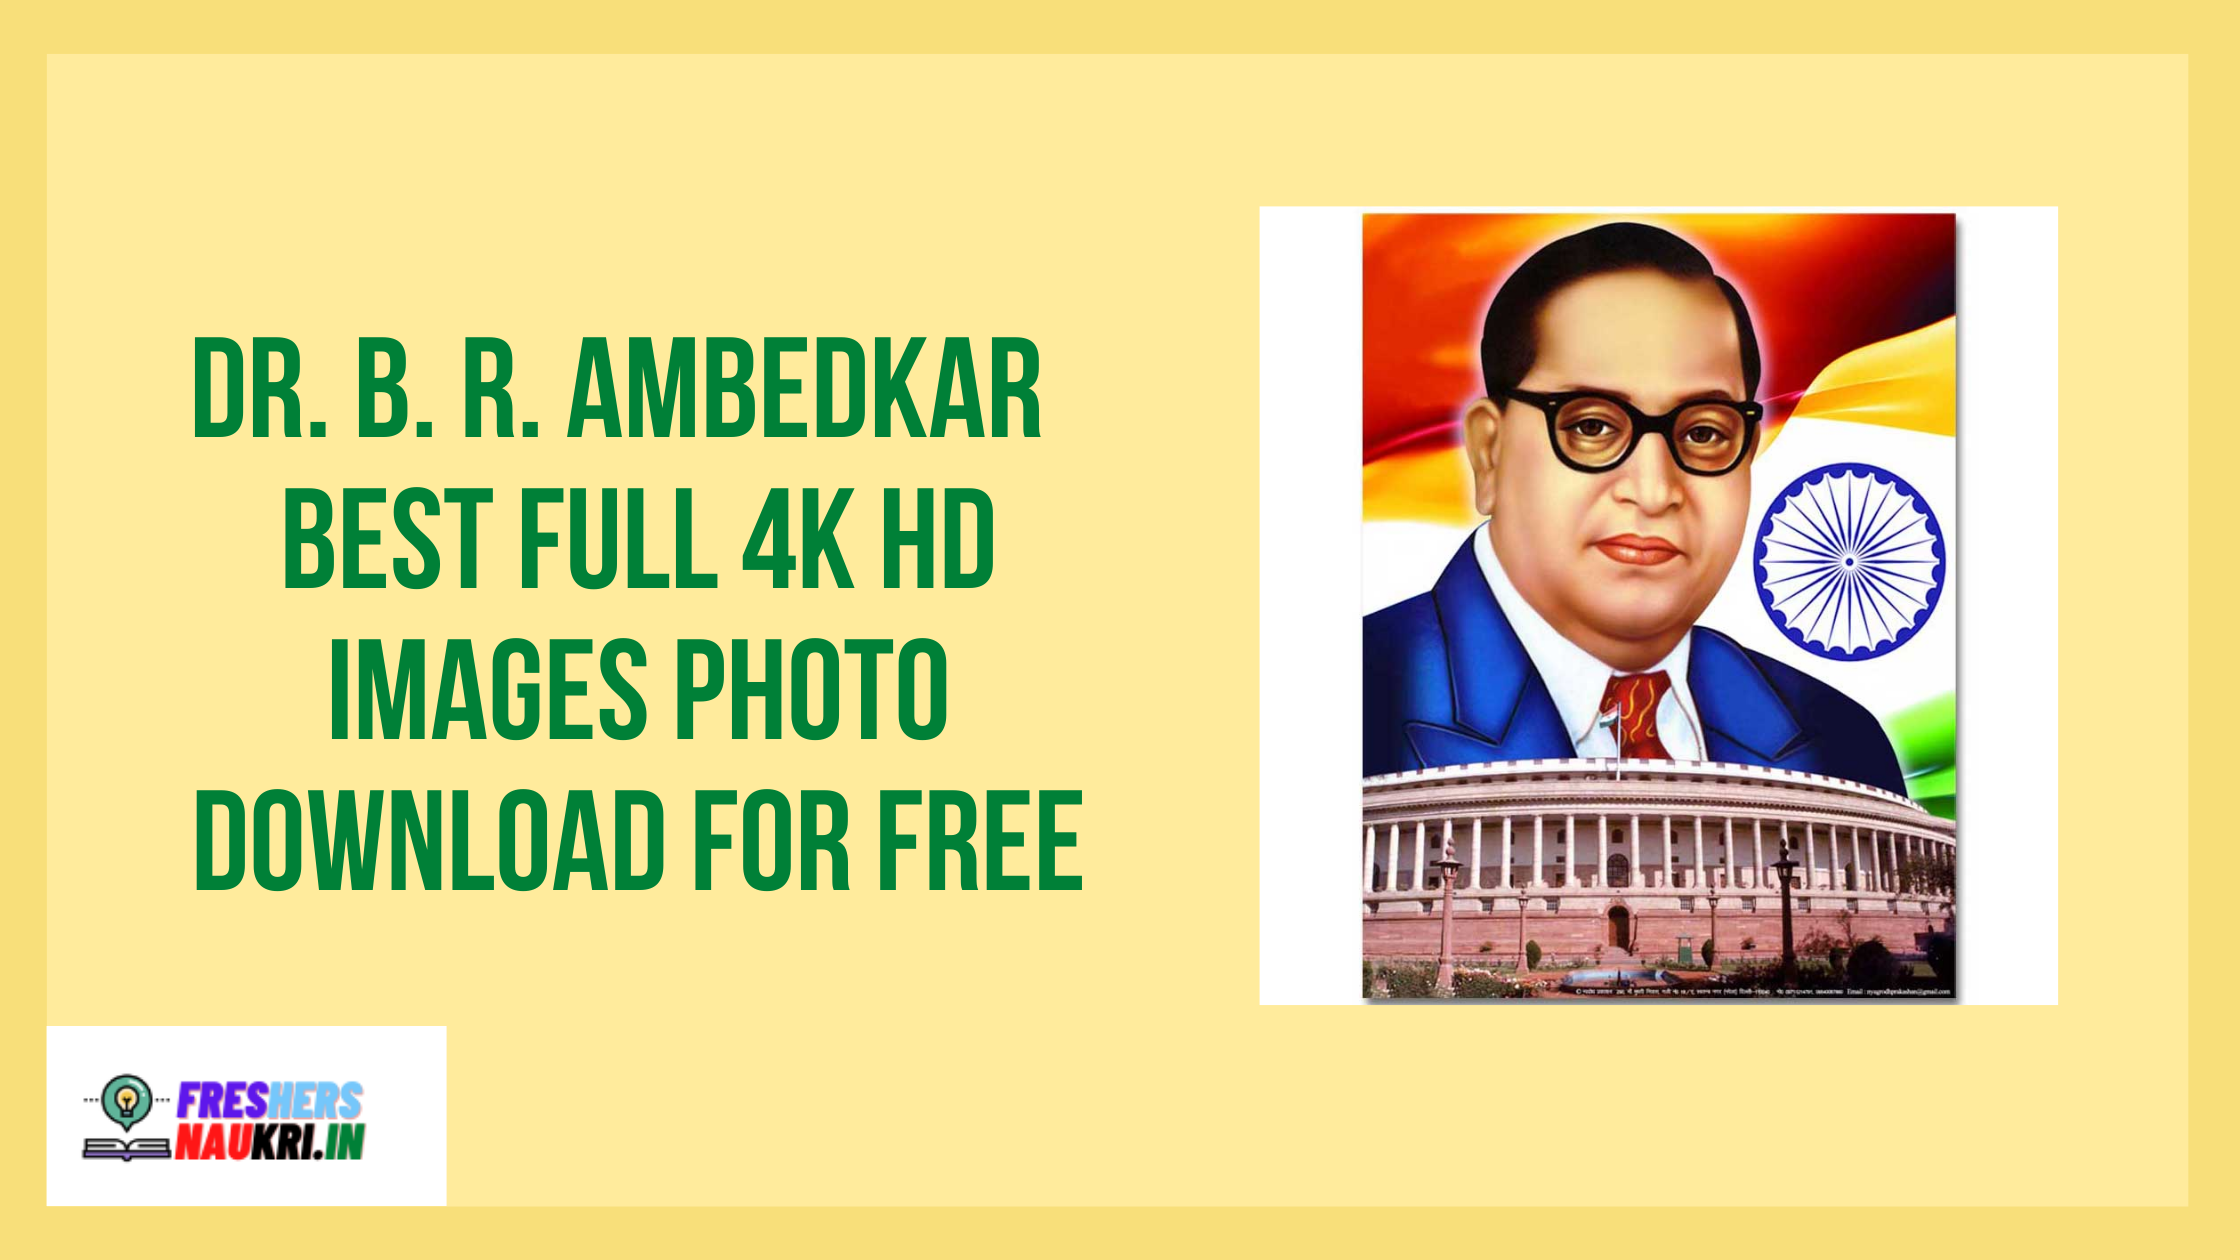 Dr. B. R. Ambedkar Best Full 4K HD Images Photo Download For Free